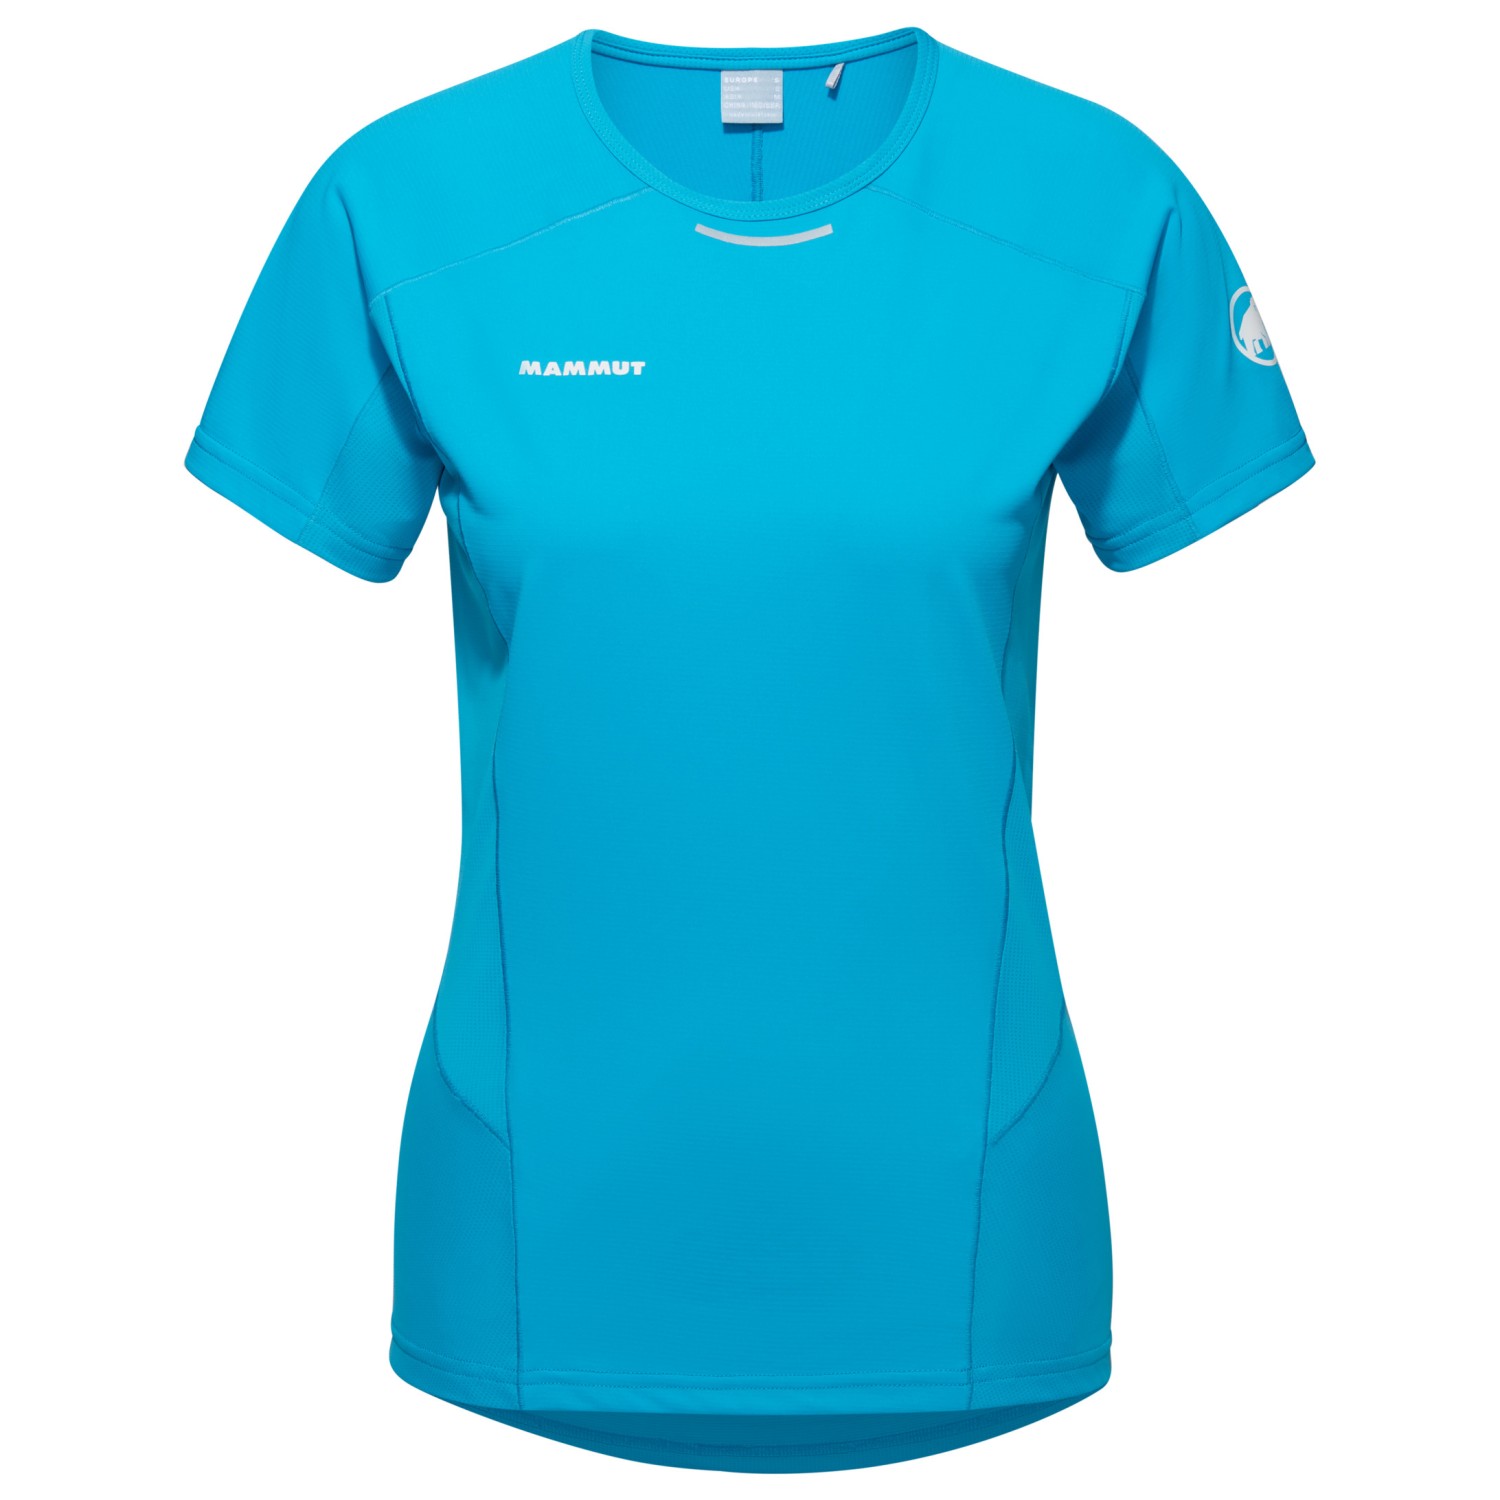 Функциональная рубашка Mammut Women's Aenergy FL T Shirt, небесно голубой